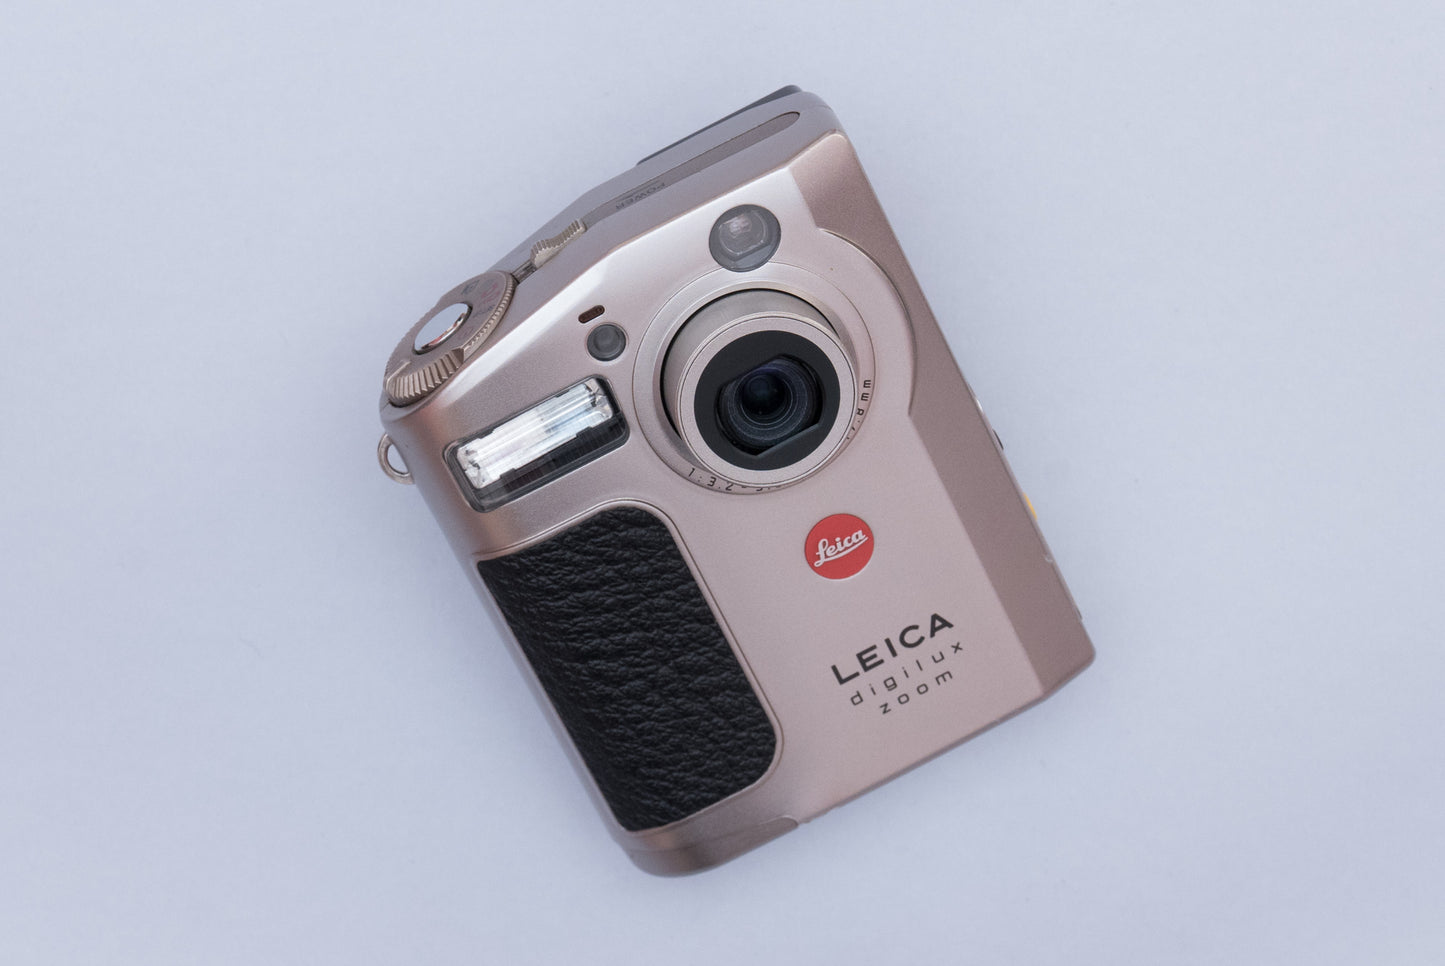 Leica DIGILUX Zoom Compact Y2K Digital Camera